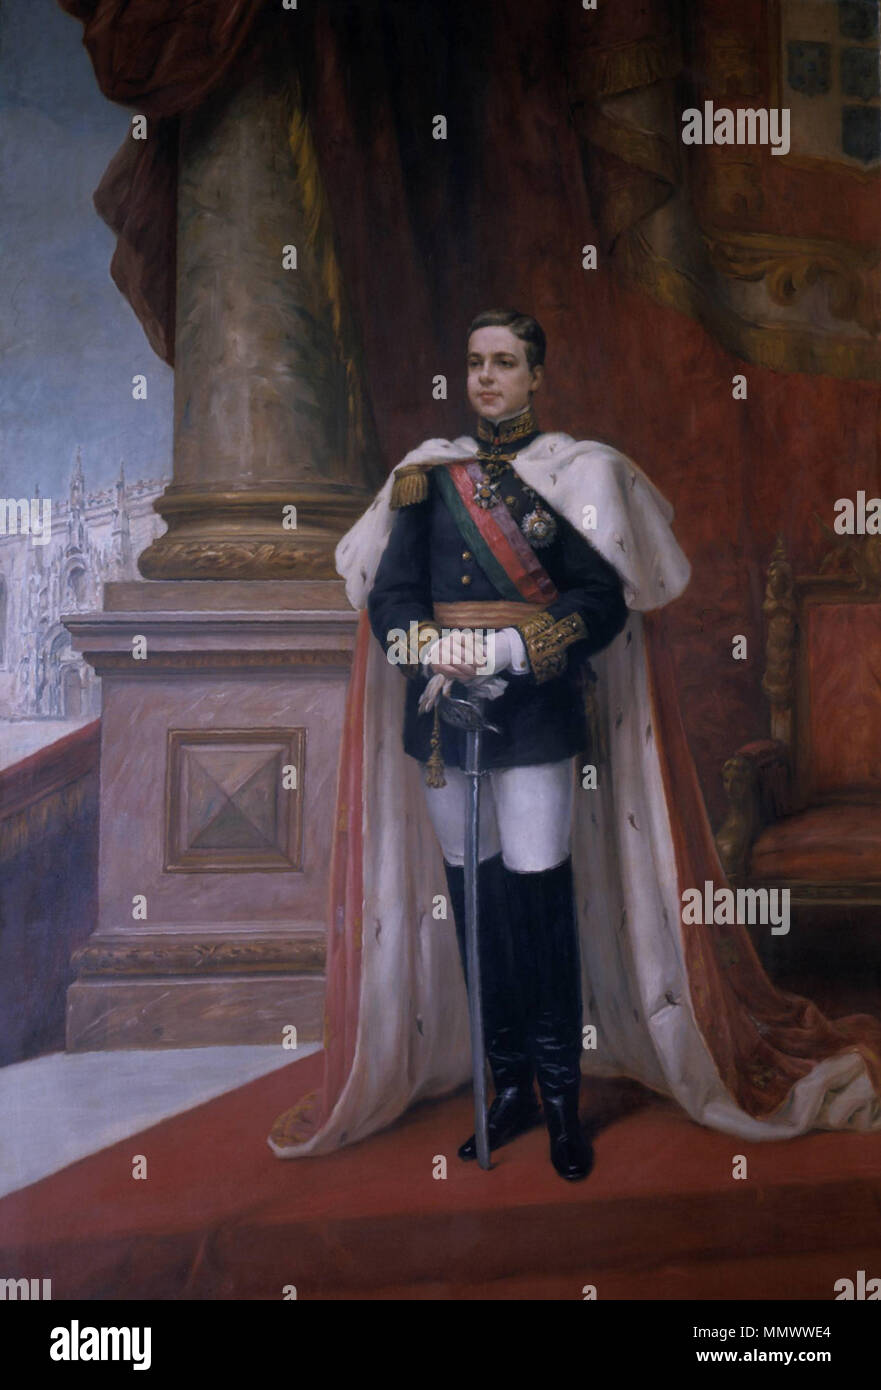 . English: Portrait of King Manuel II of Portugal, in Lisbon Town Hall (1908), by Veloso Salgado. Português: Retrato de D. Manuel II, nos Paços do Concelho de Lisboa (1908), por Veloso Salgado. D. Manuel II (1908) - Veloso Salgado Stock Photo